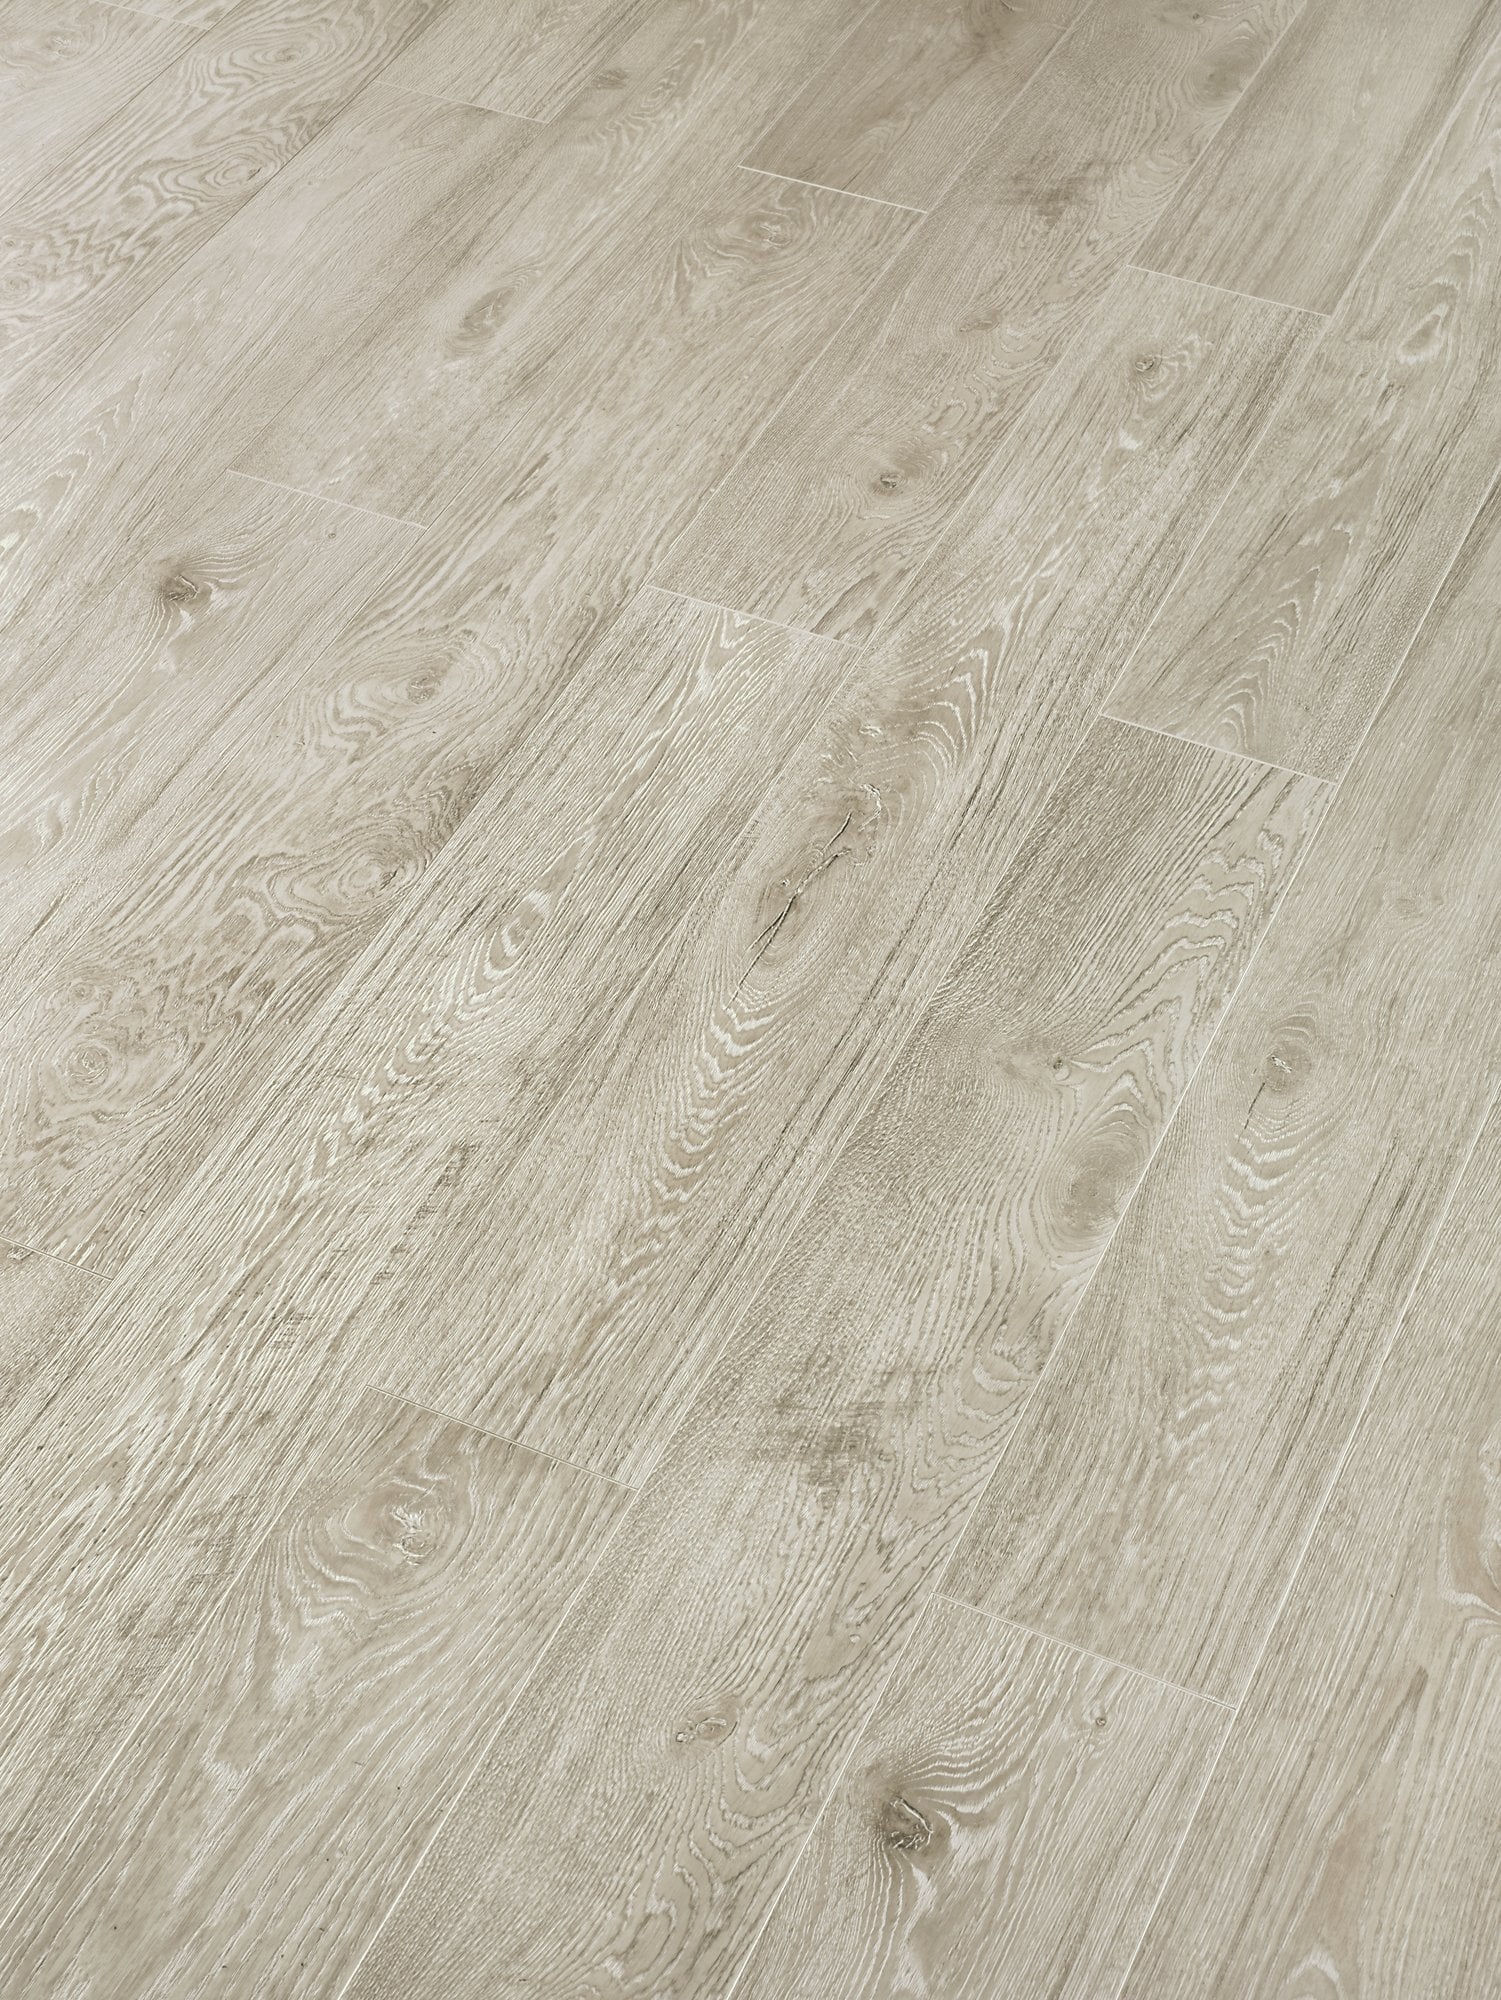 Laminate Oak Sand Hardwood Flooring, Can I Sand Laminate Flooring